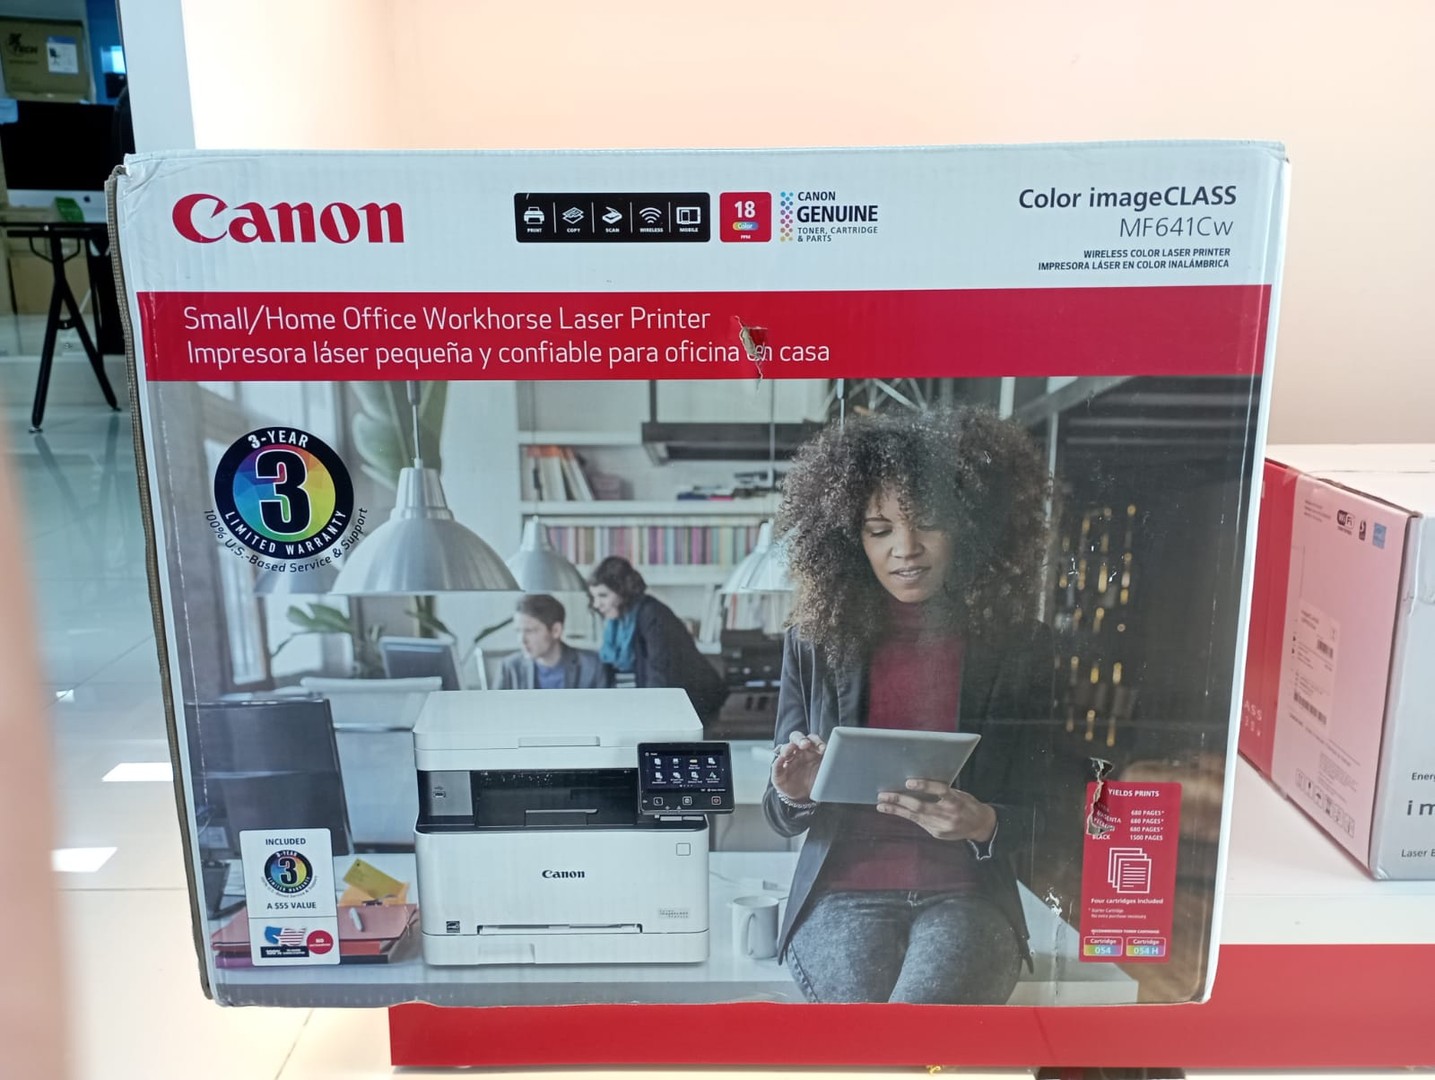 Impresora Canon Laser color imagenclass MF641CW multifuncional 0